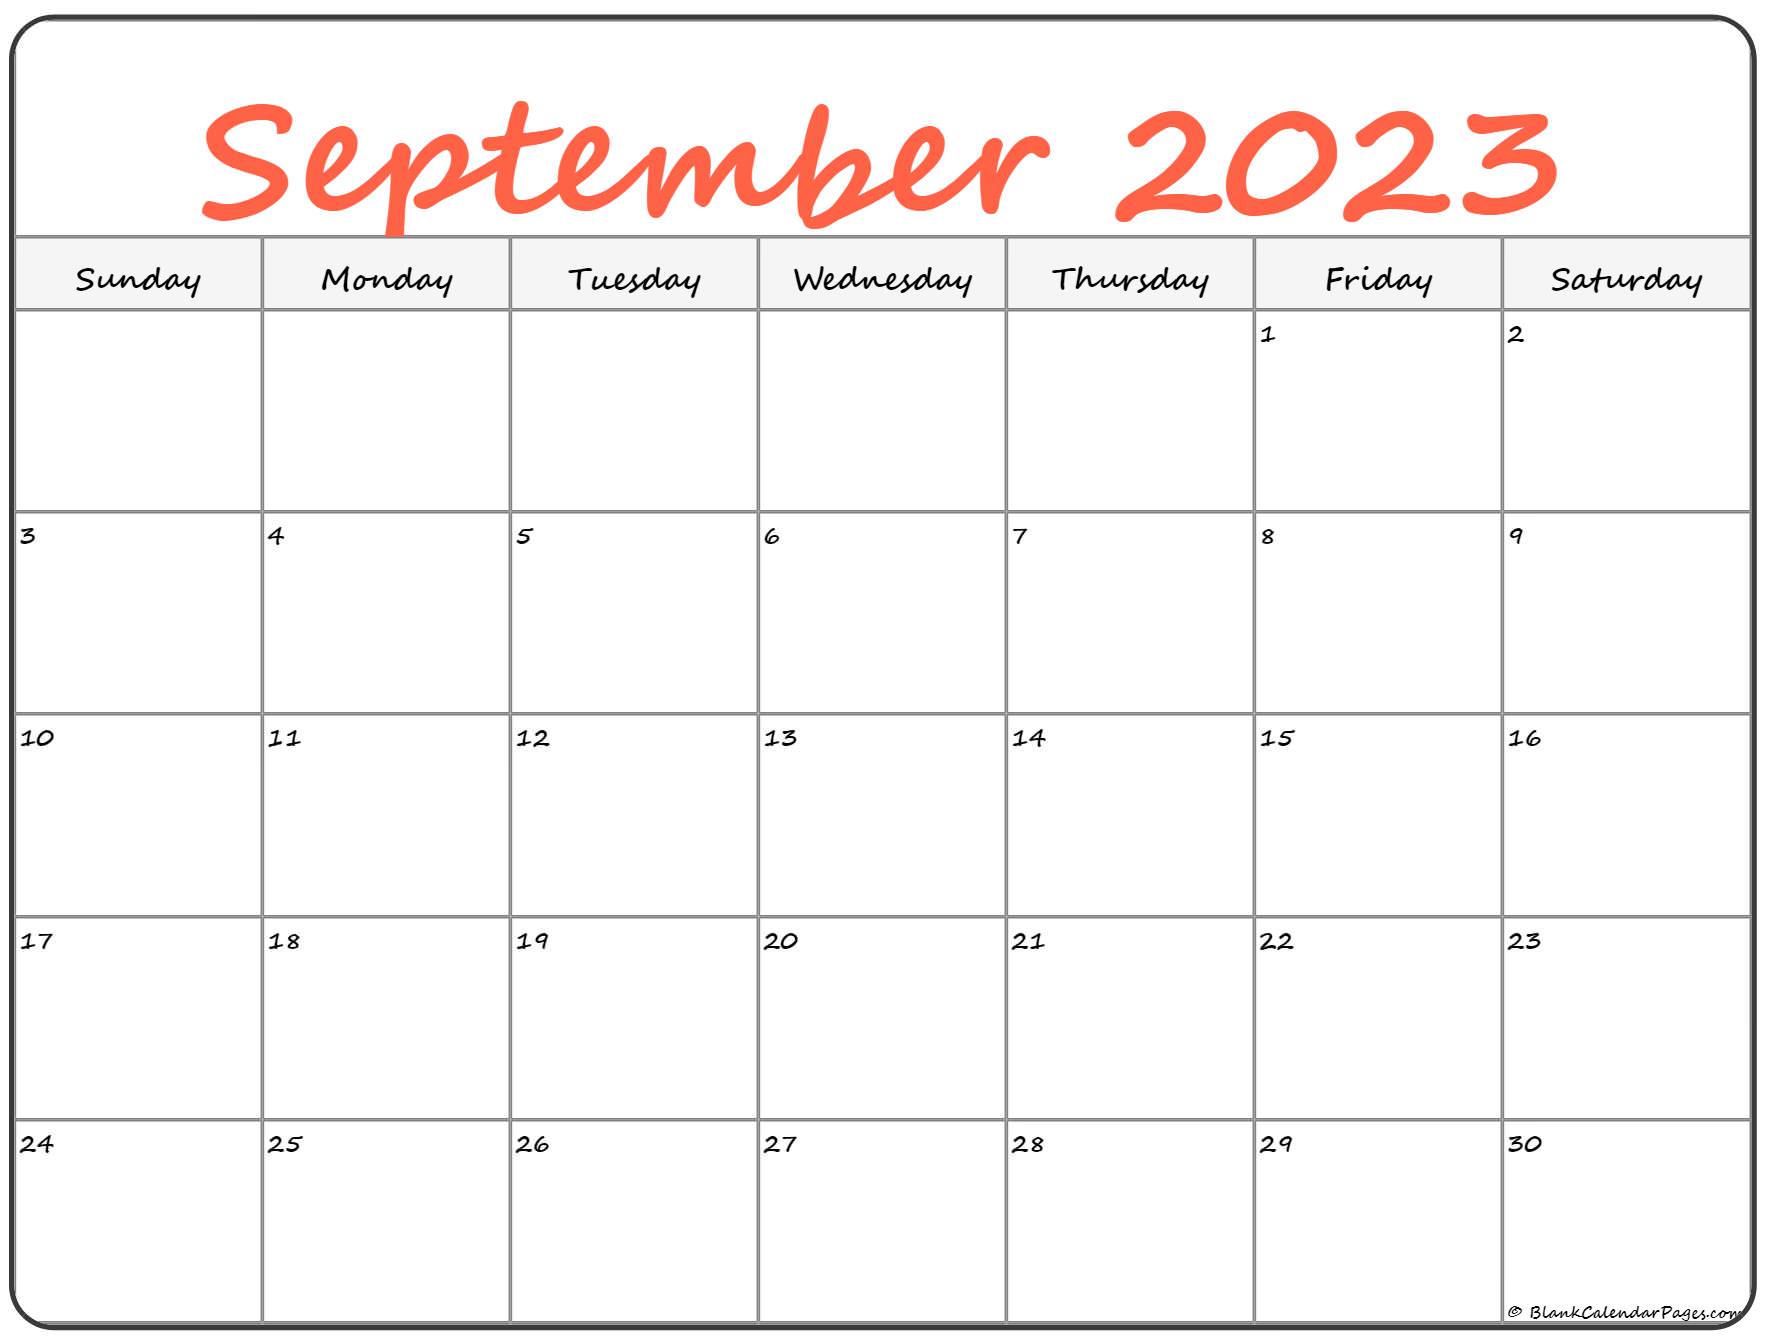 Quarterly Calendars 2023 Free Printable Word Templates Quarterly Calendars 2023 Free Printable 